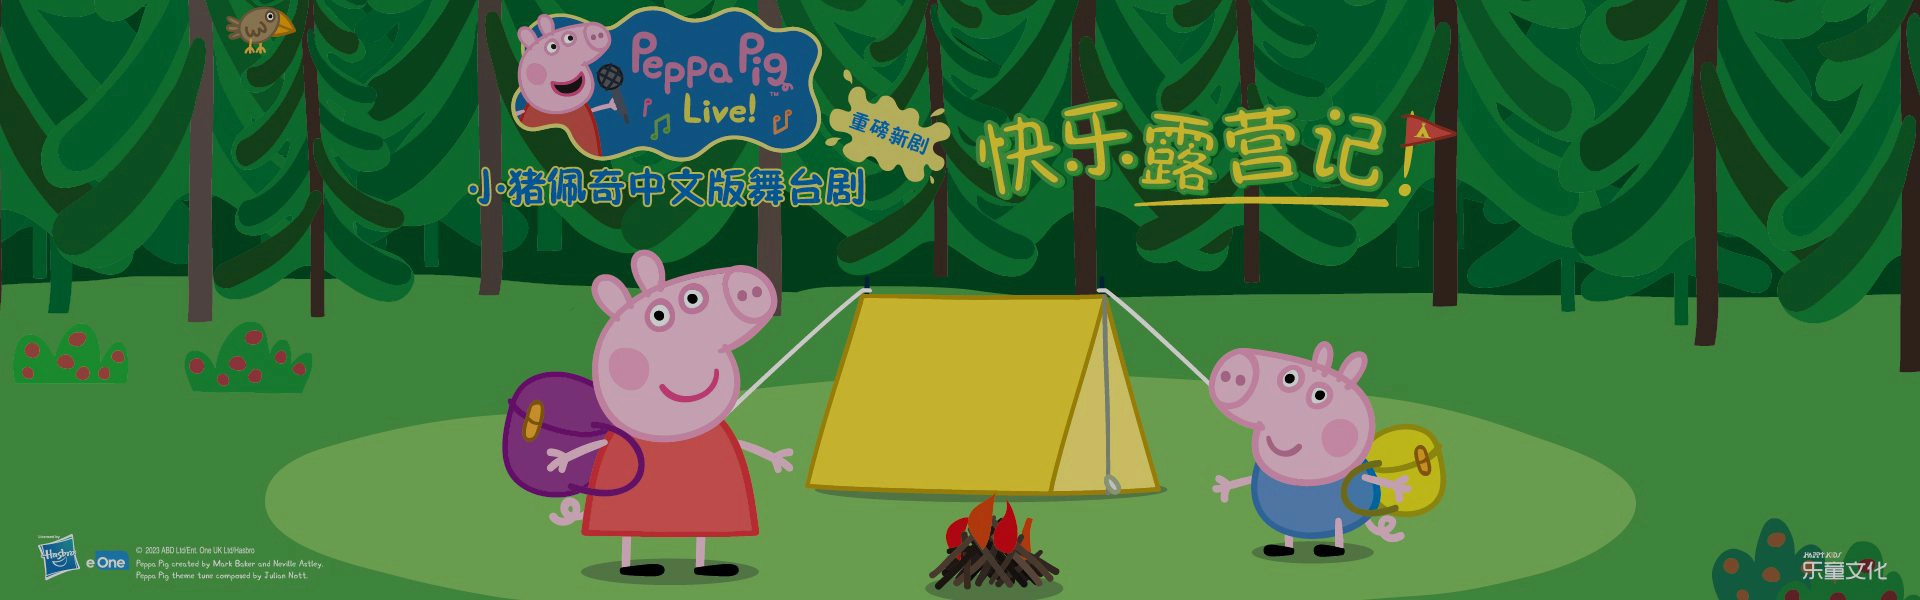 Peppa Pig Live Show